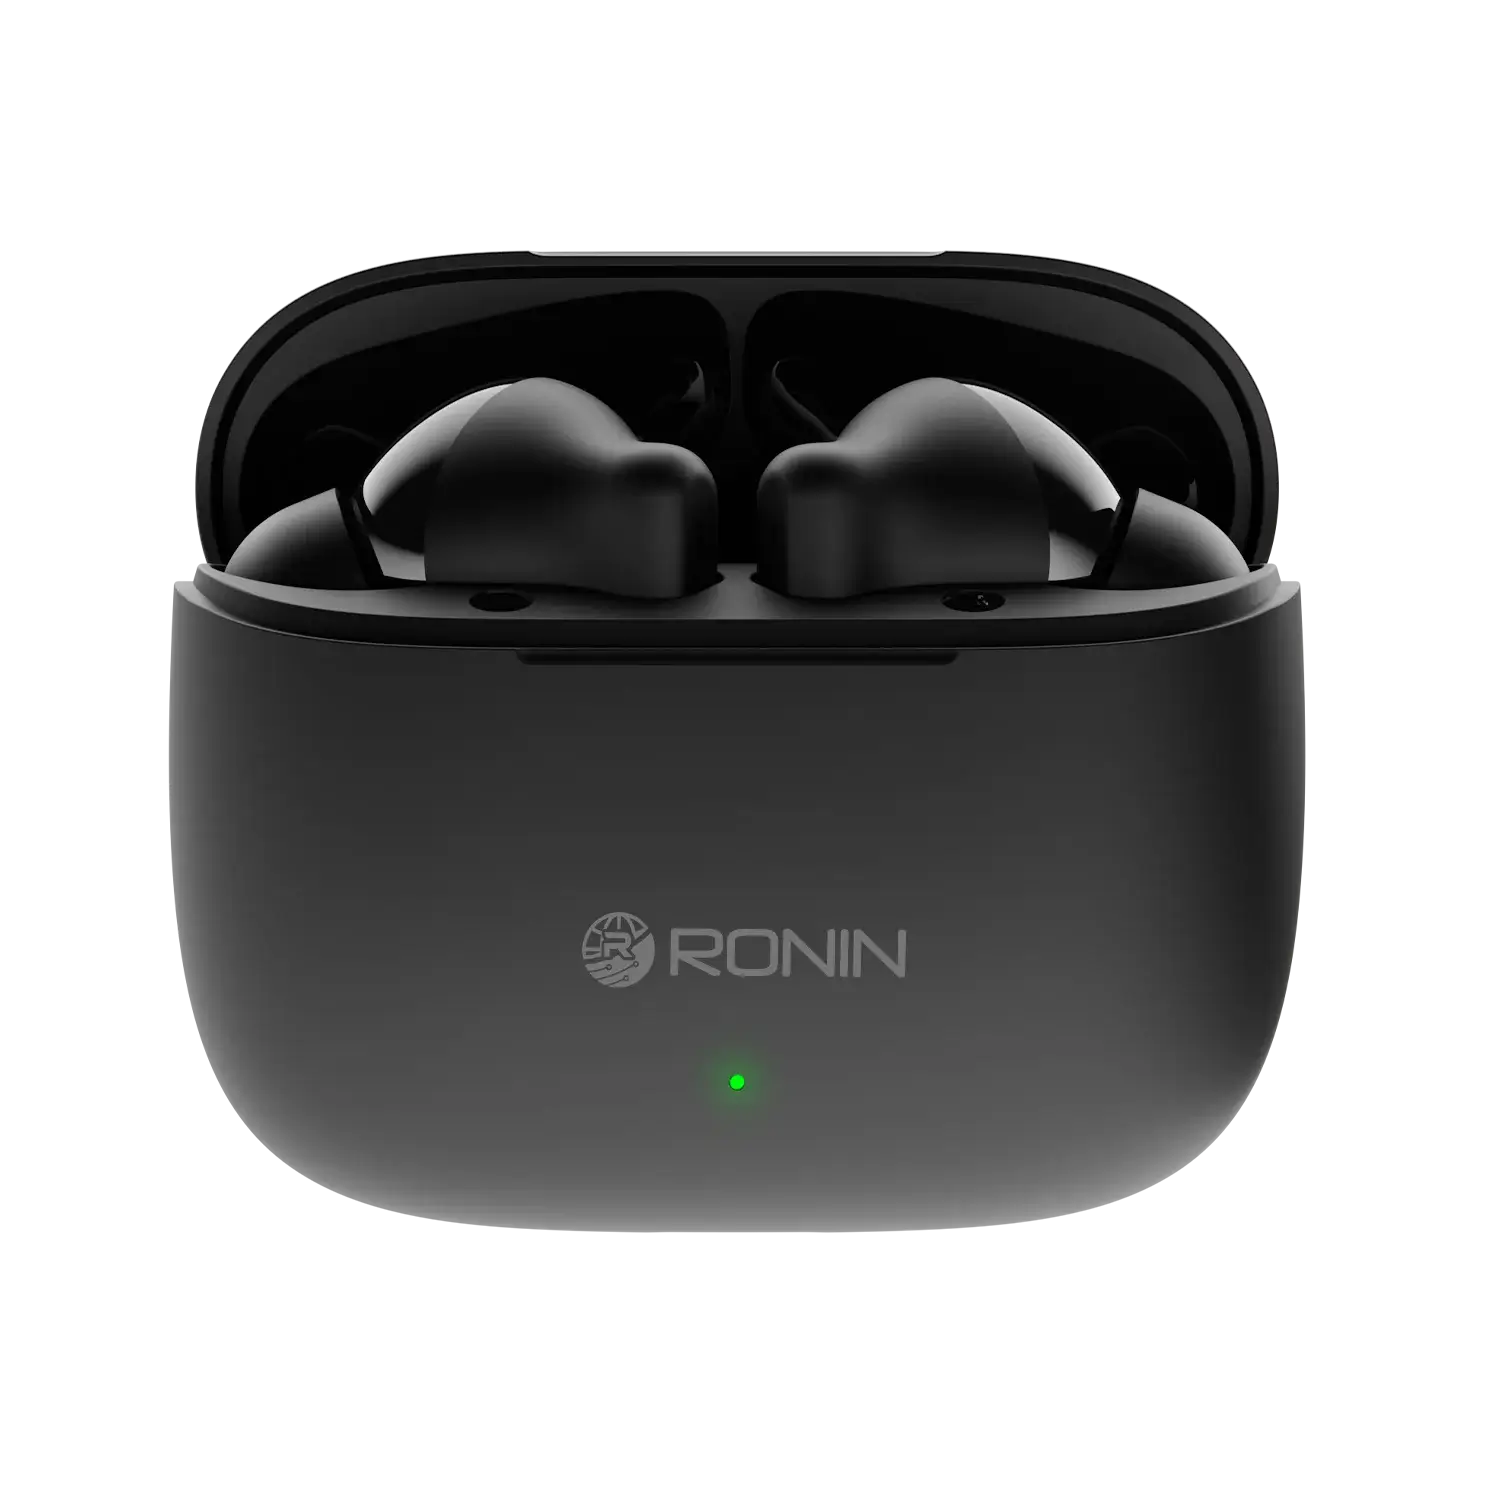 Ronin R740 earbuds Price in pakistan